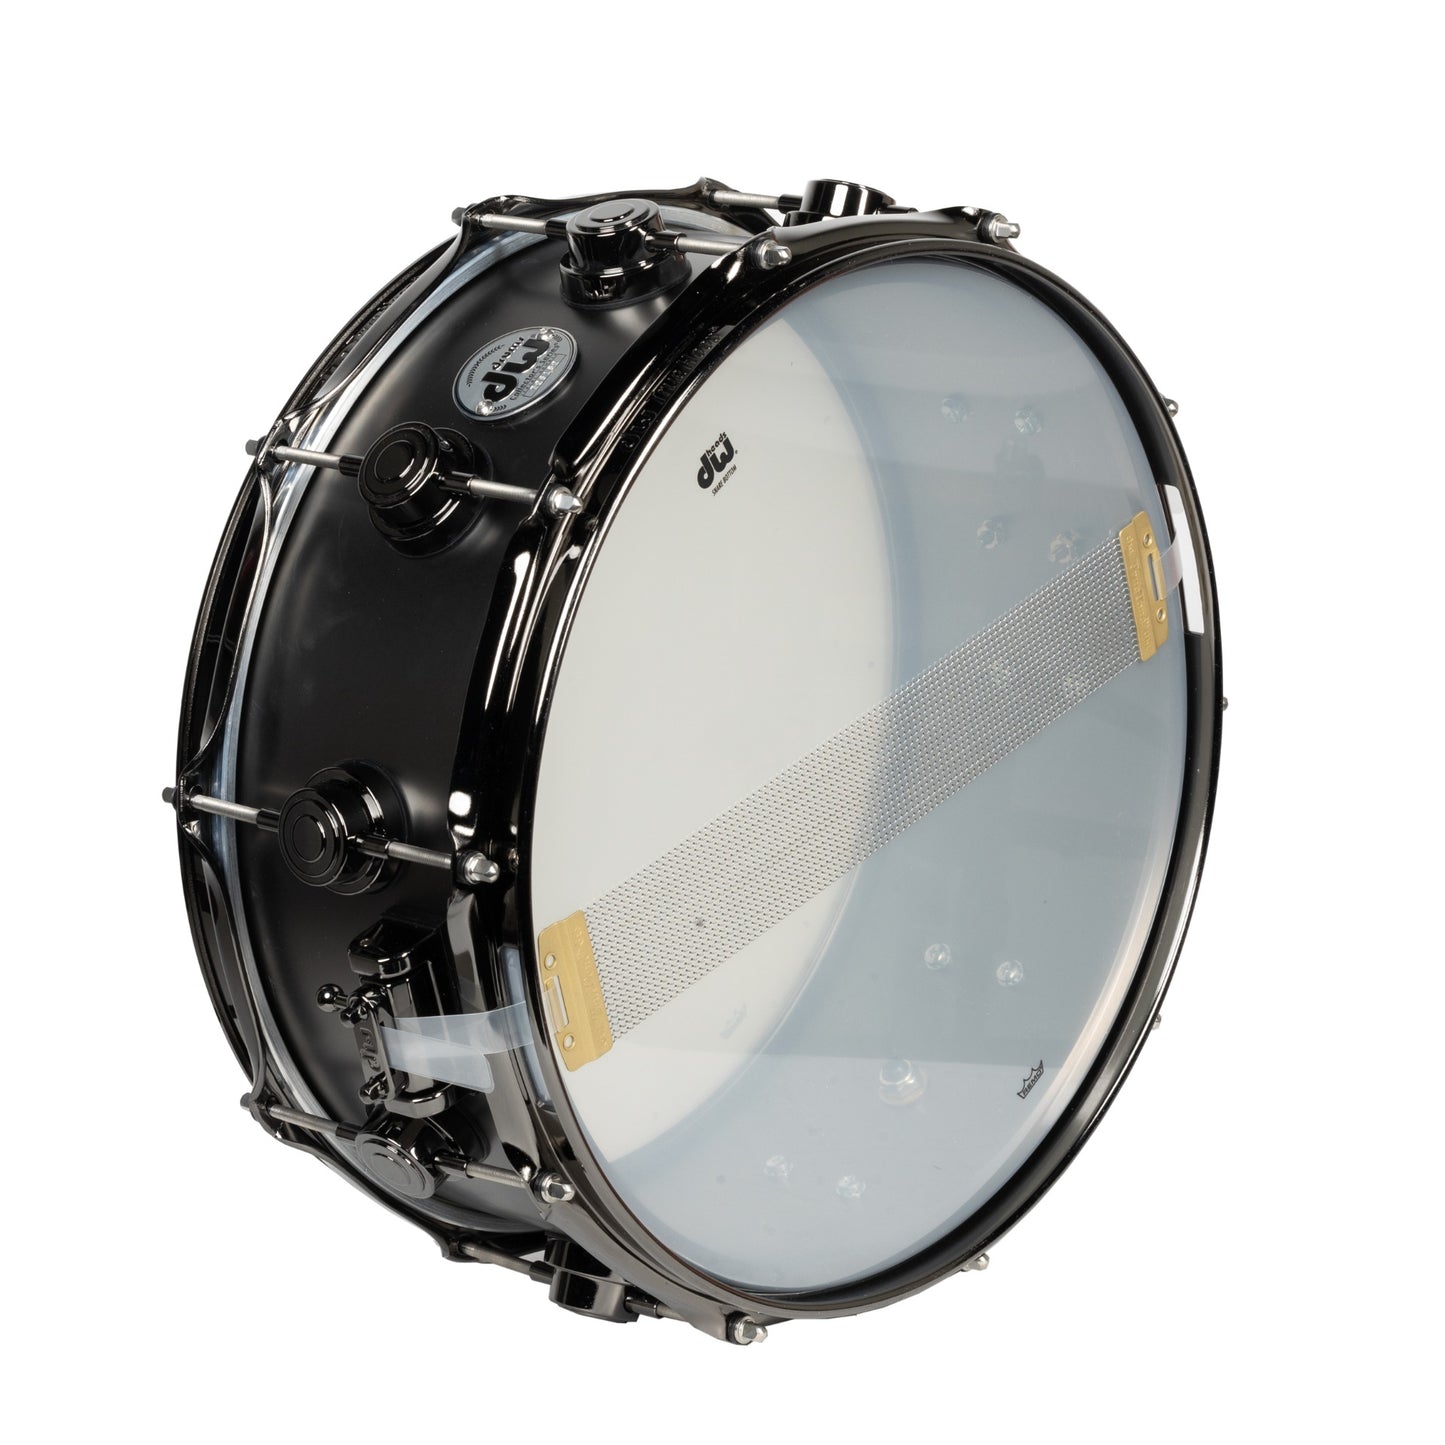 Drum Workshop Collectors Series 5.5x14 Snare Drum - Satin Black Nickel